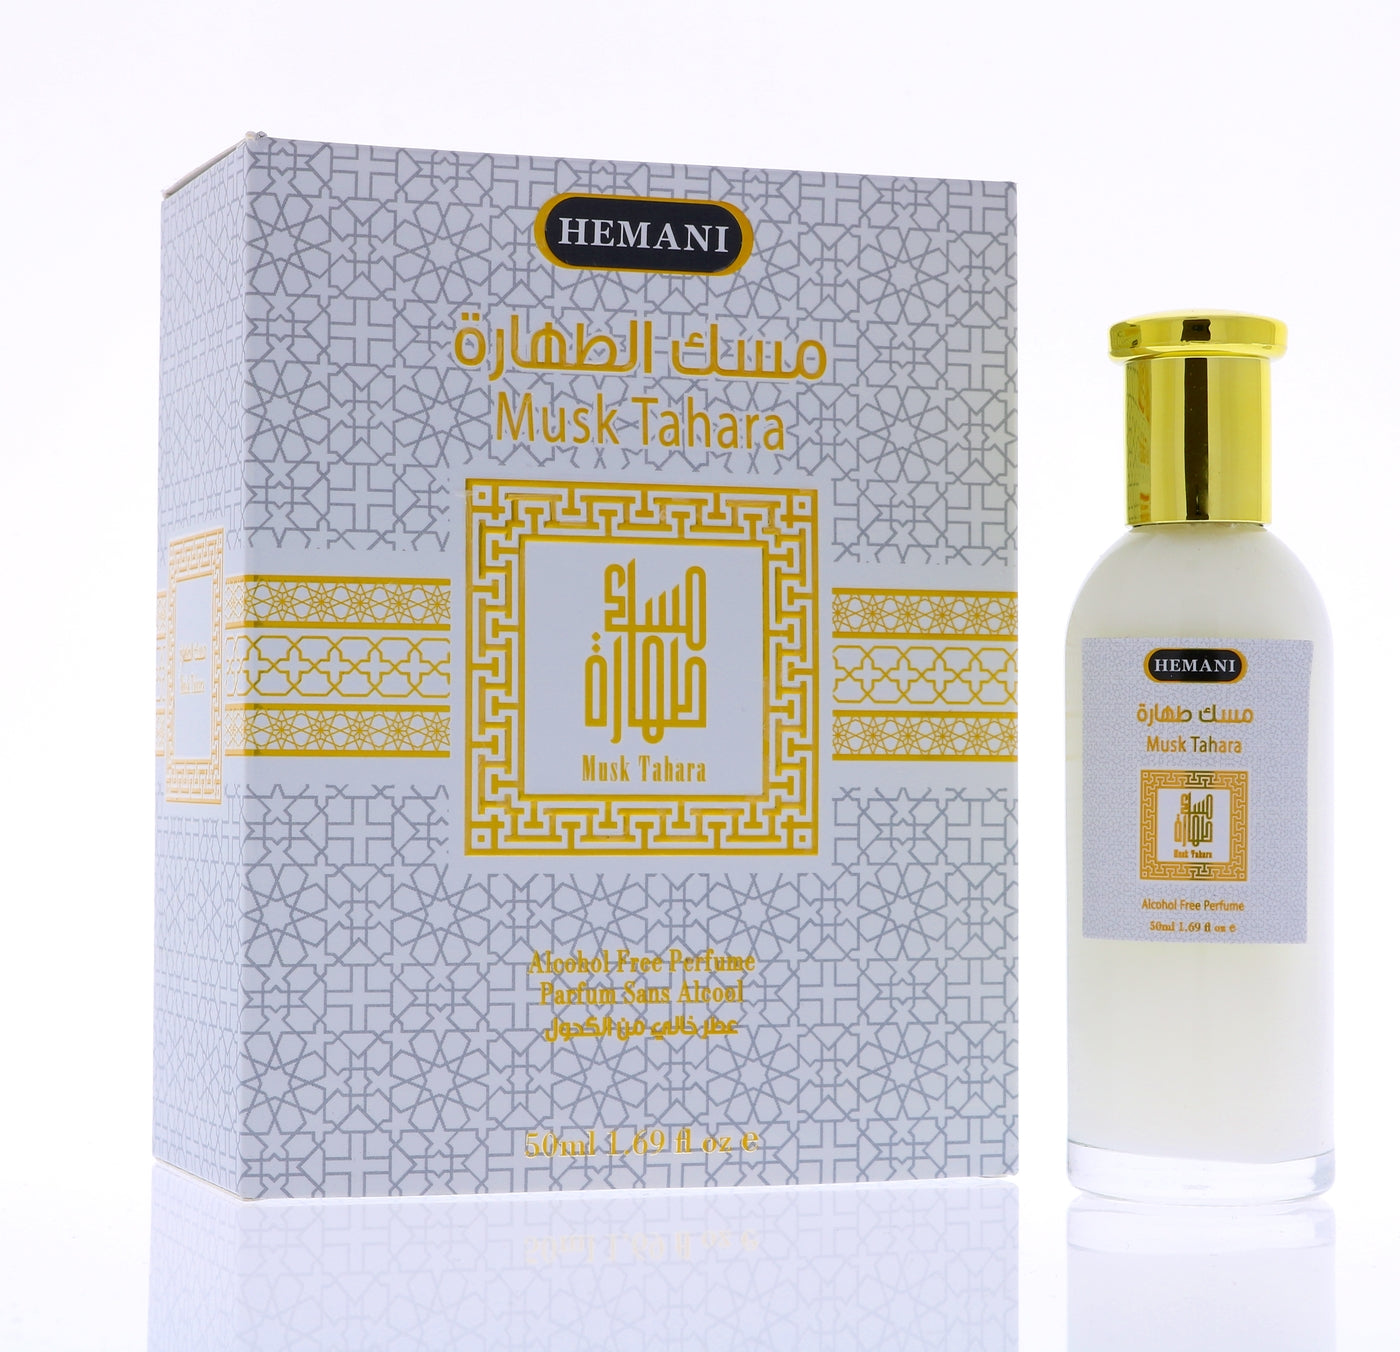 hemani-musk-tahara-oriental-perfume-for-him-her-50ml-1